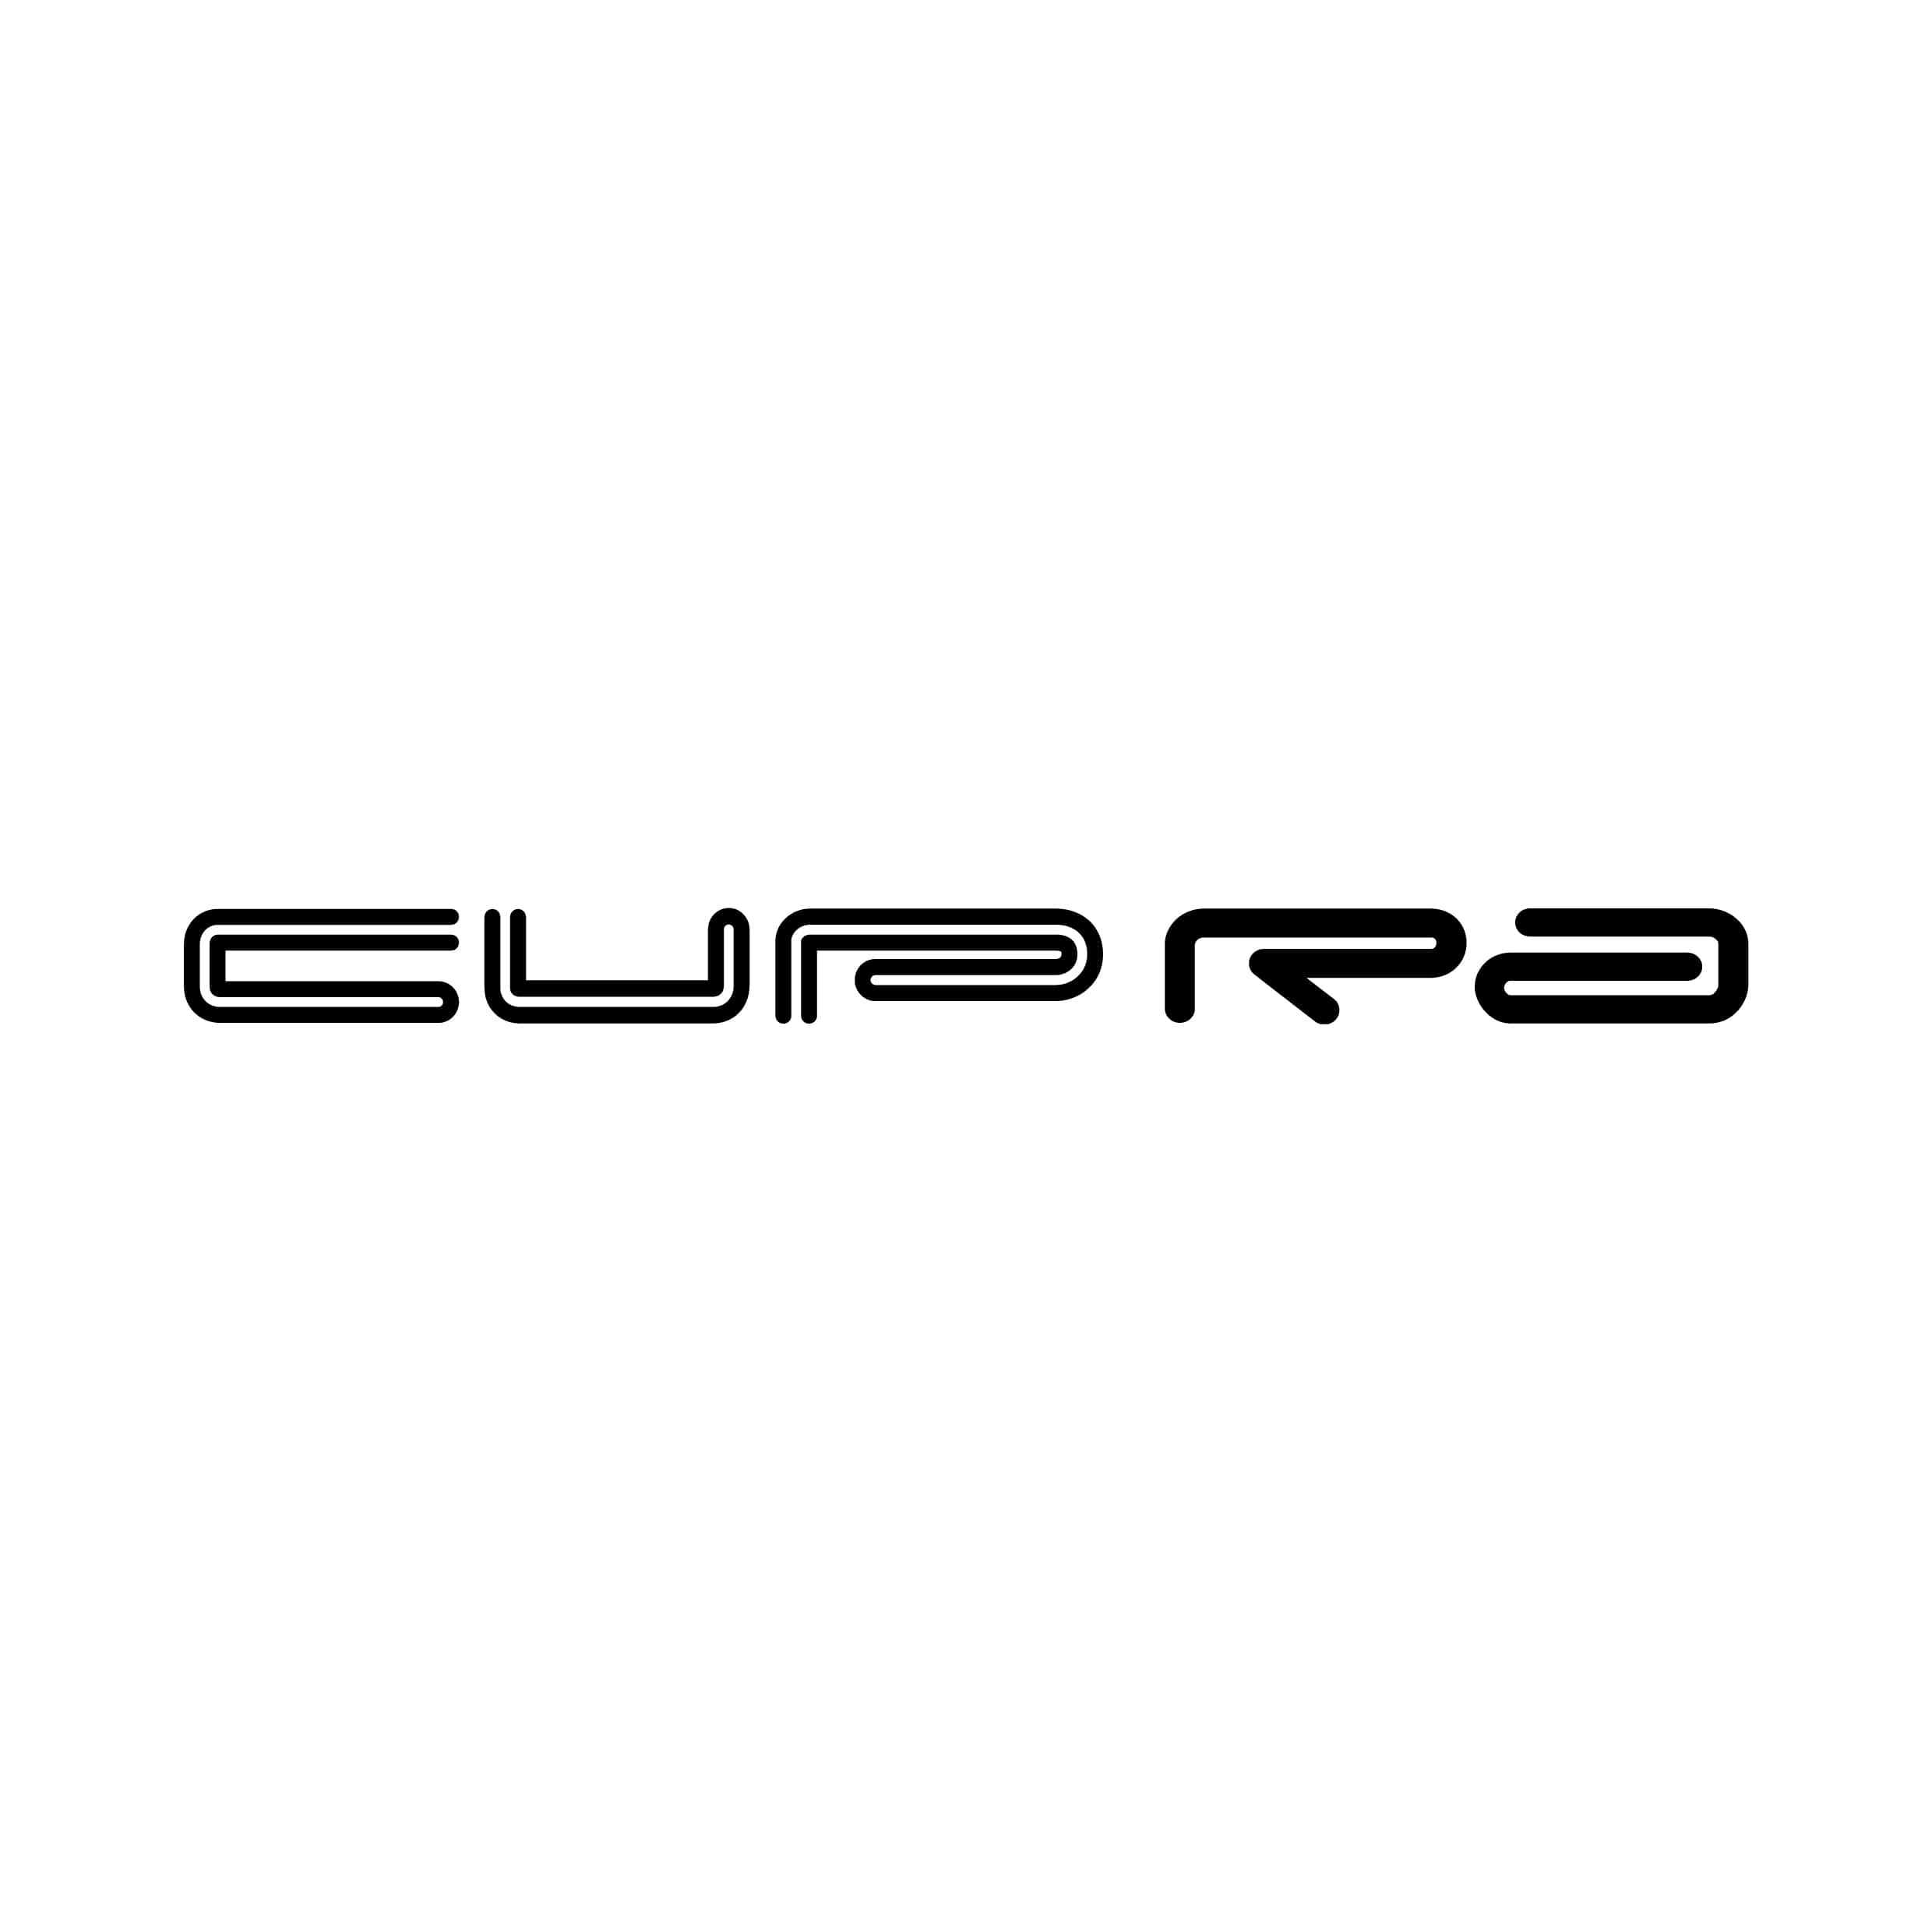 stickers-seat-cupra-ref11-autocollant-voiture-sticker-auto-autocollants-decals-sponsors-racing-tuning-sport-logo-min